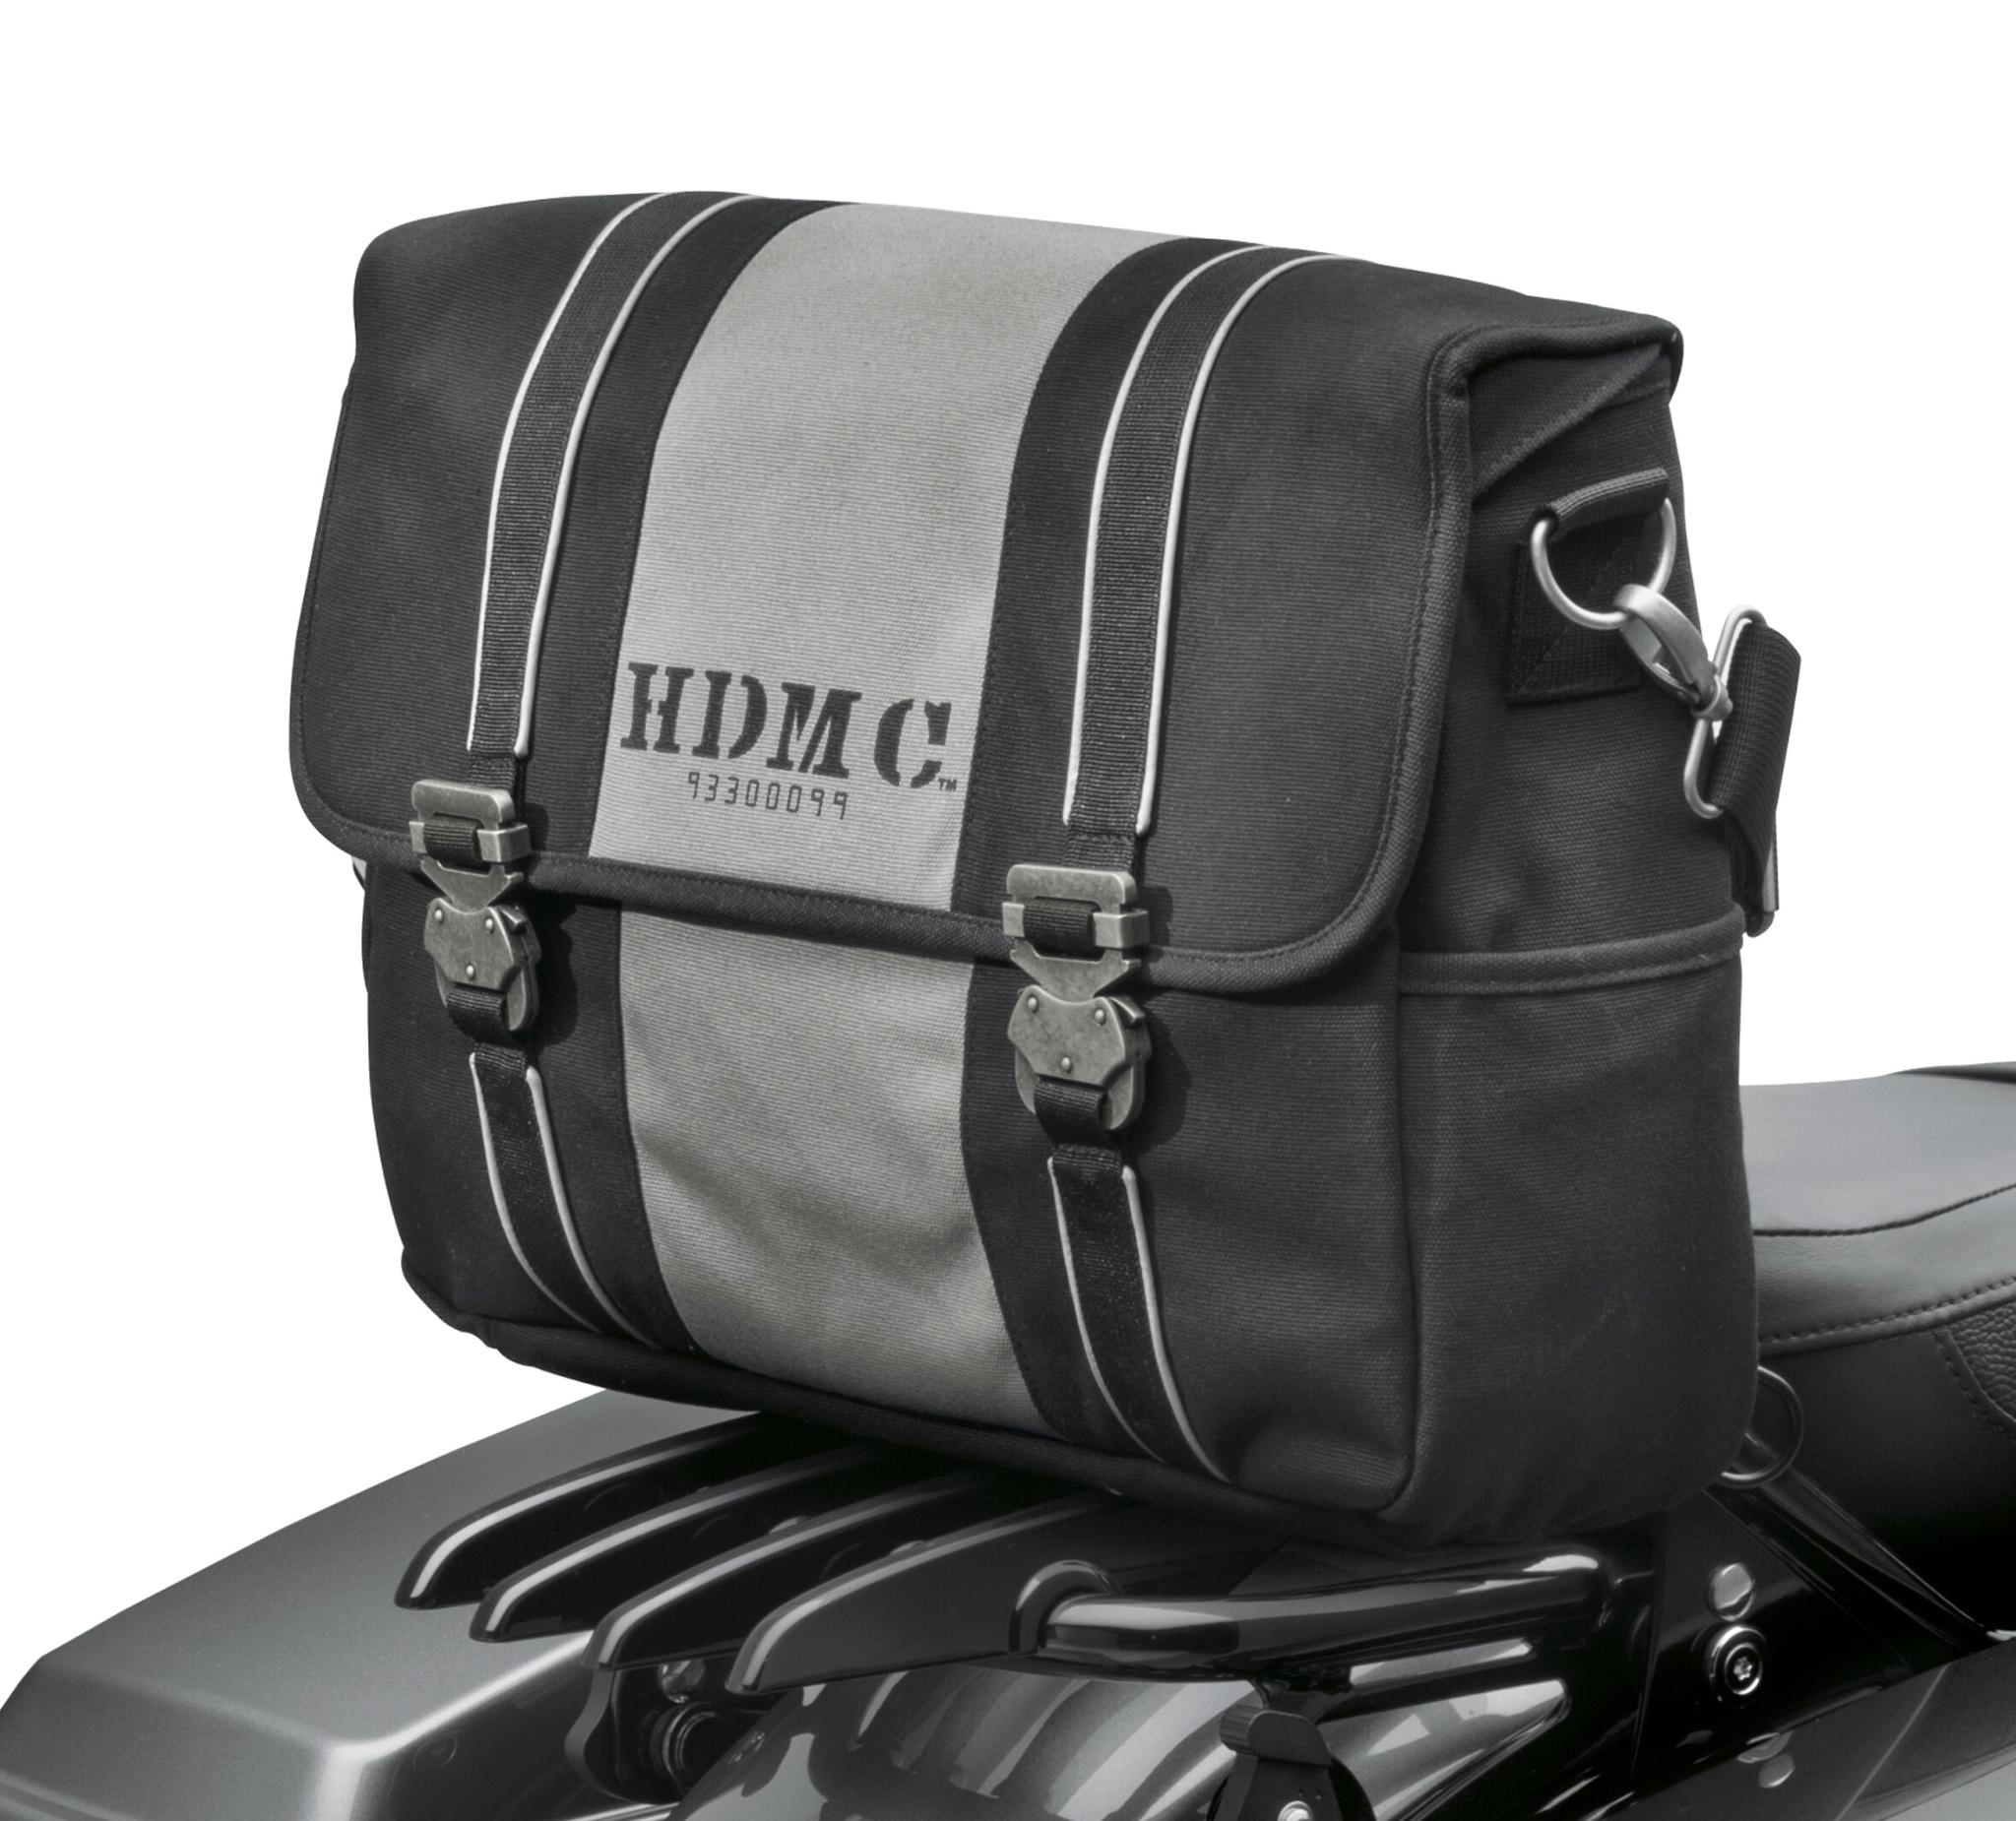 HDMC Messenger Bag - Black/Silver 93300099 | Harley-Davidson USA